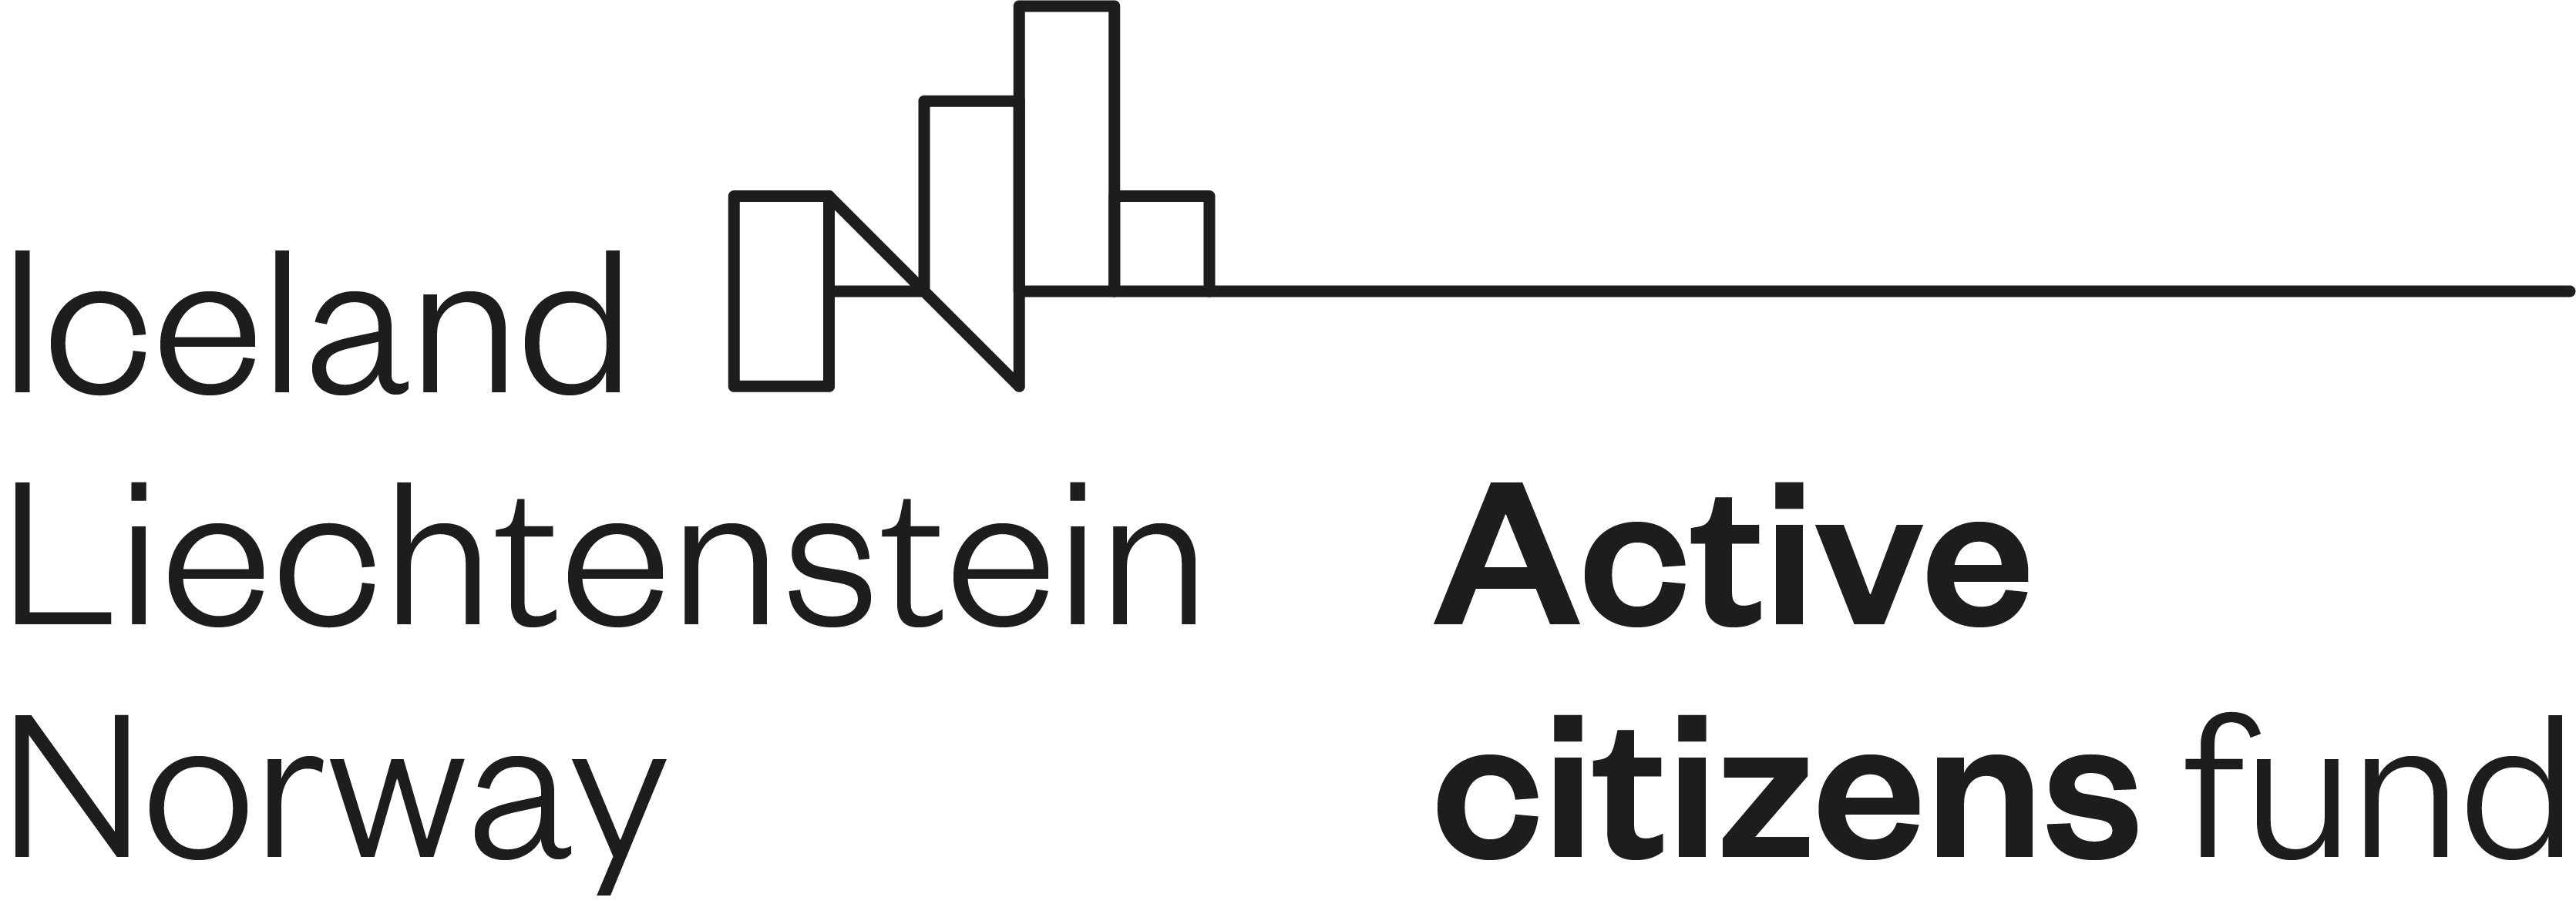 active-citizens-fund-4x